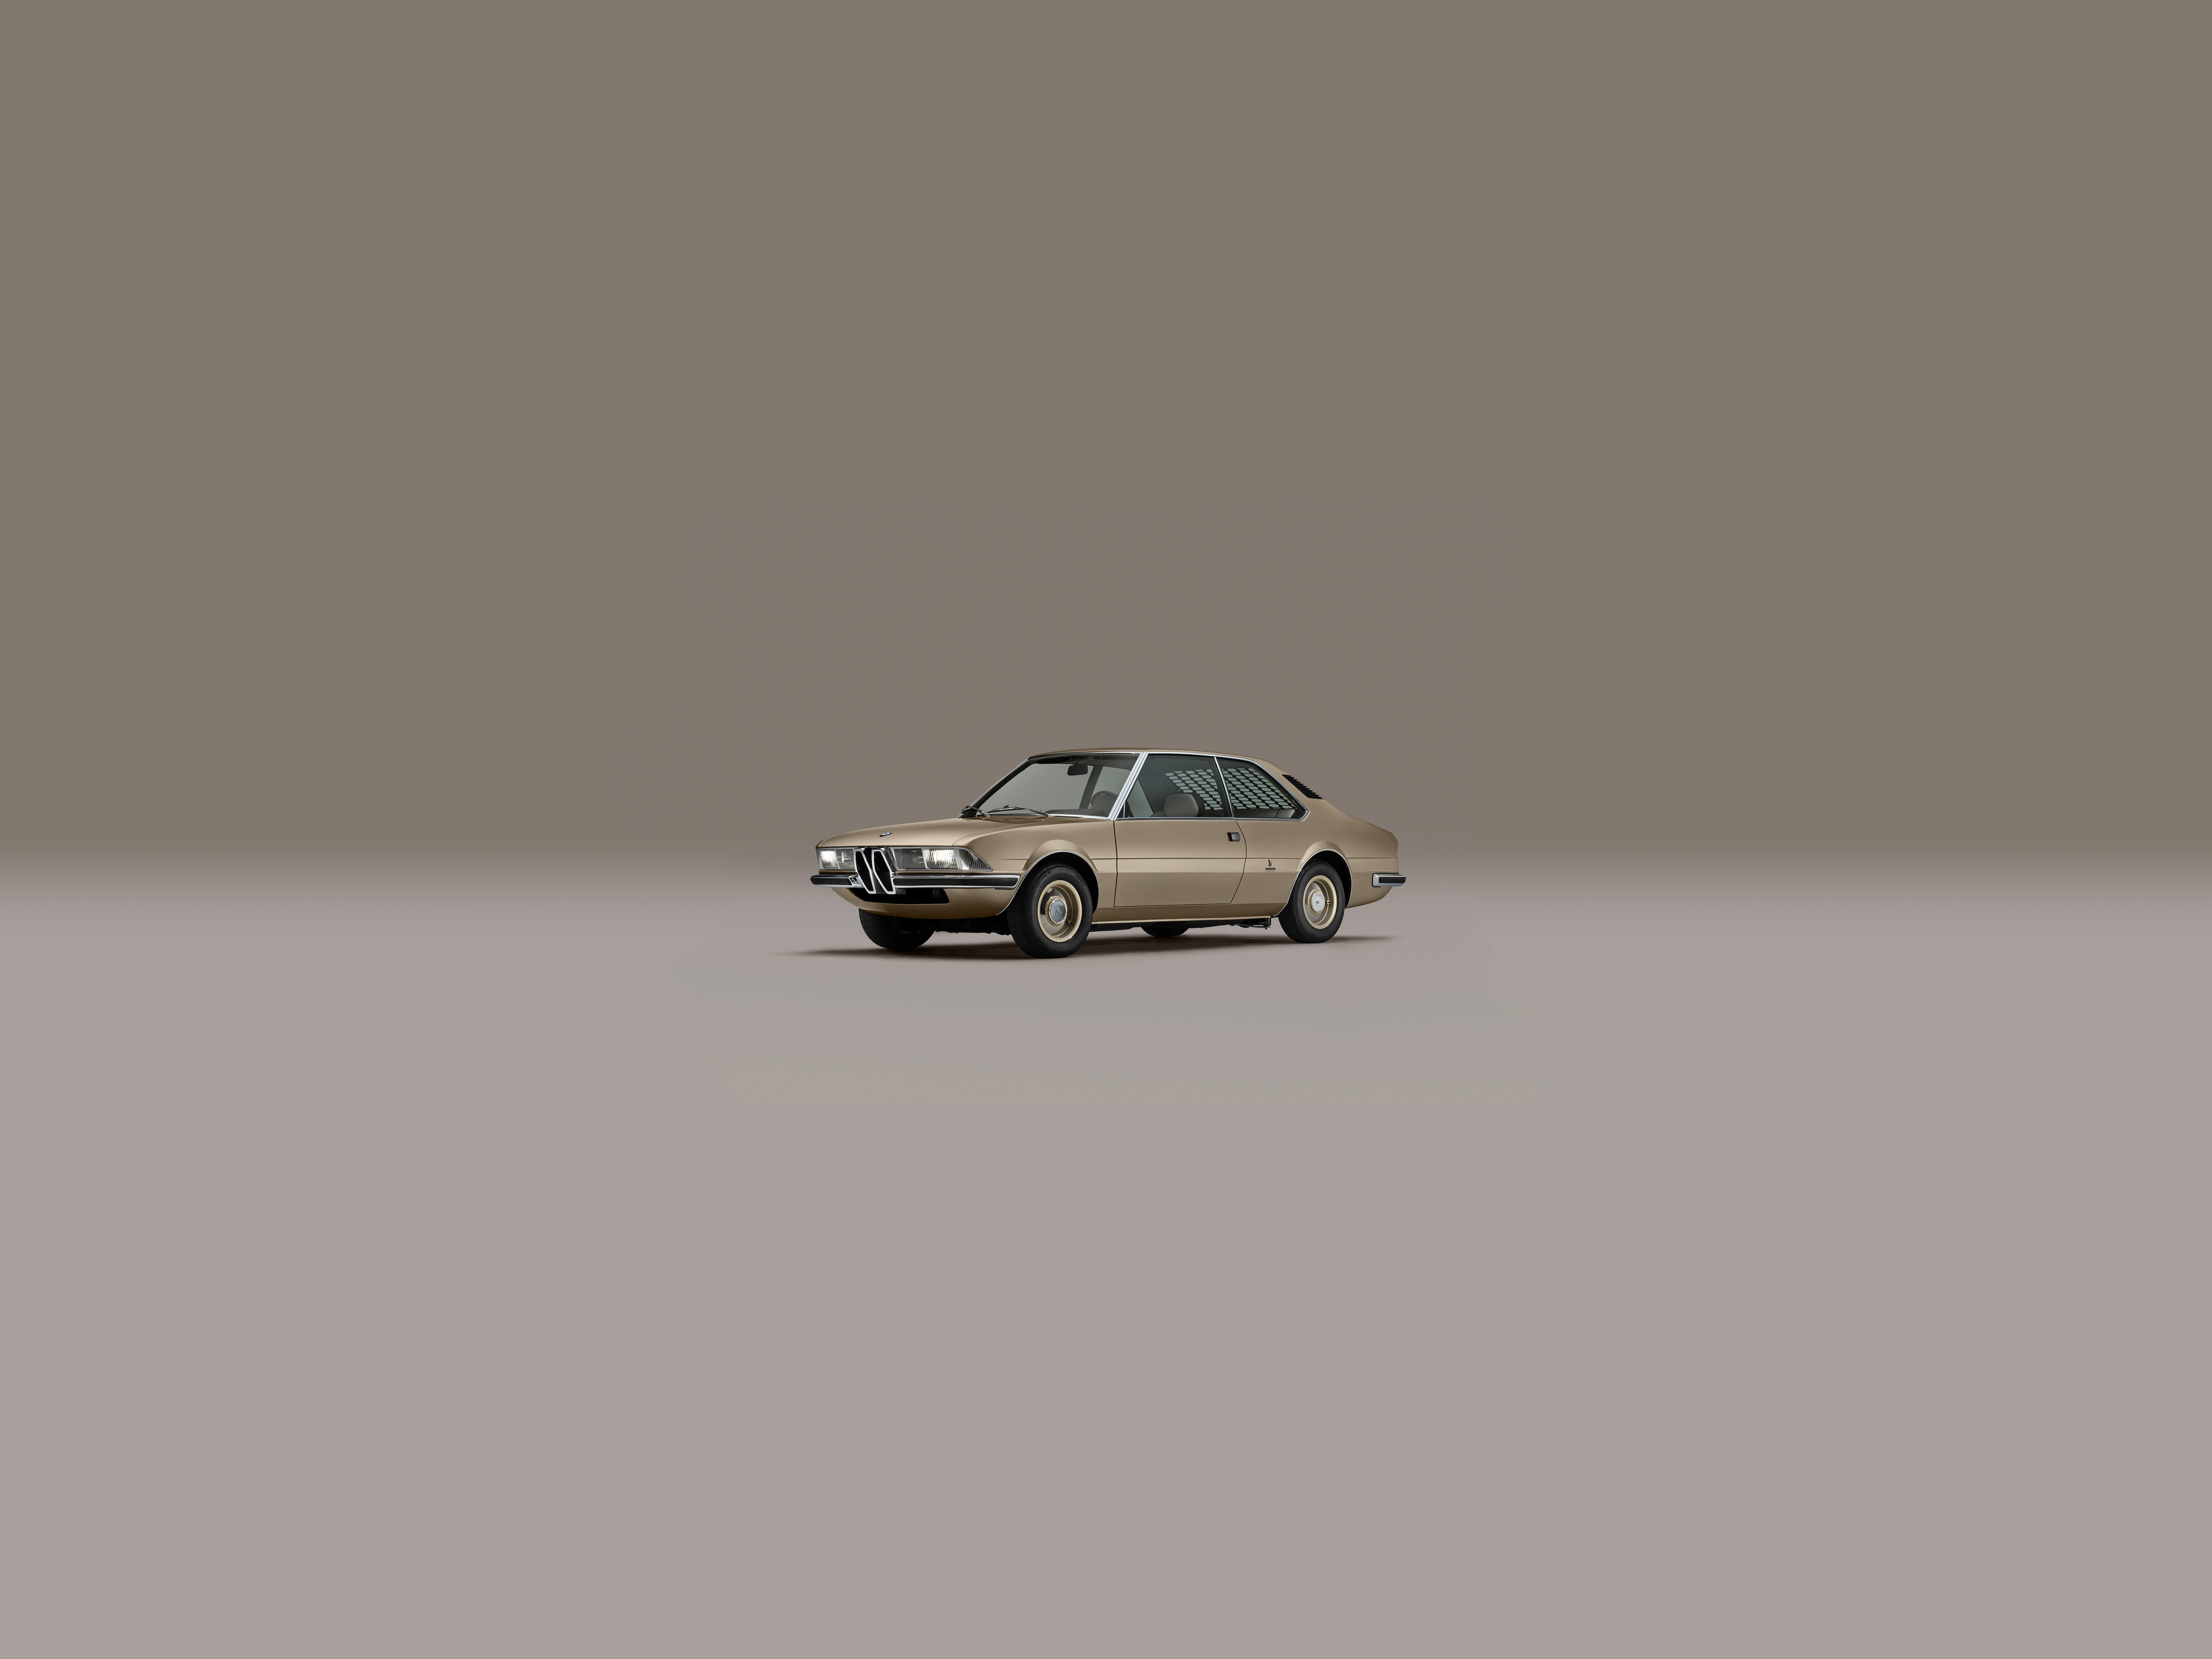 General 5786x4340 car old car BMW gray background minimalism digital art simple background